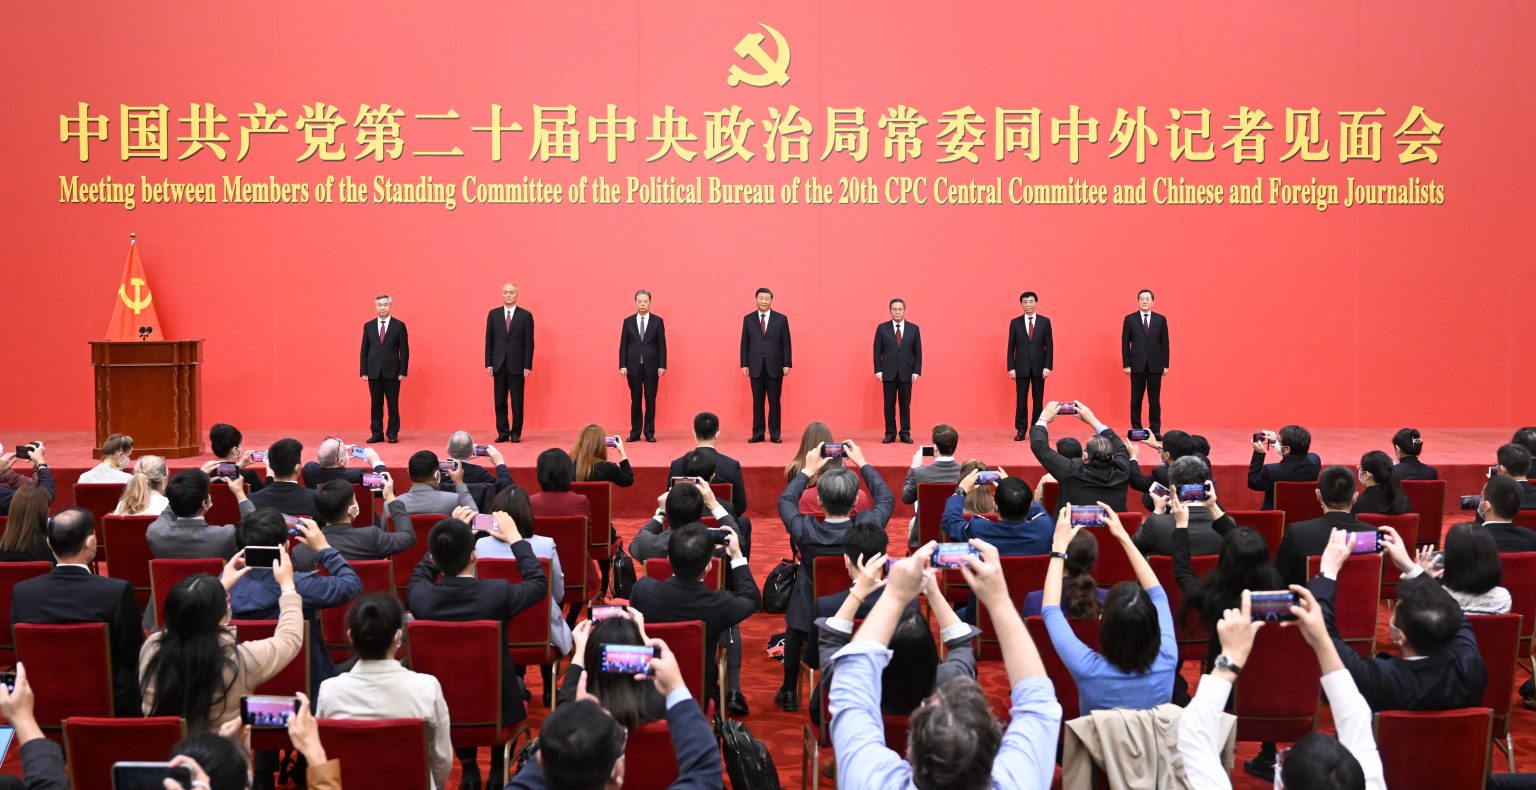 Presiden Xi mengungkapkan susunan baru untuk Komite Tetap Politbiro